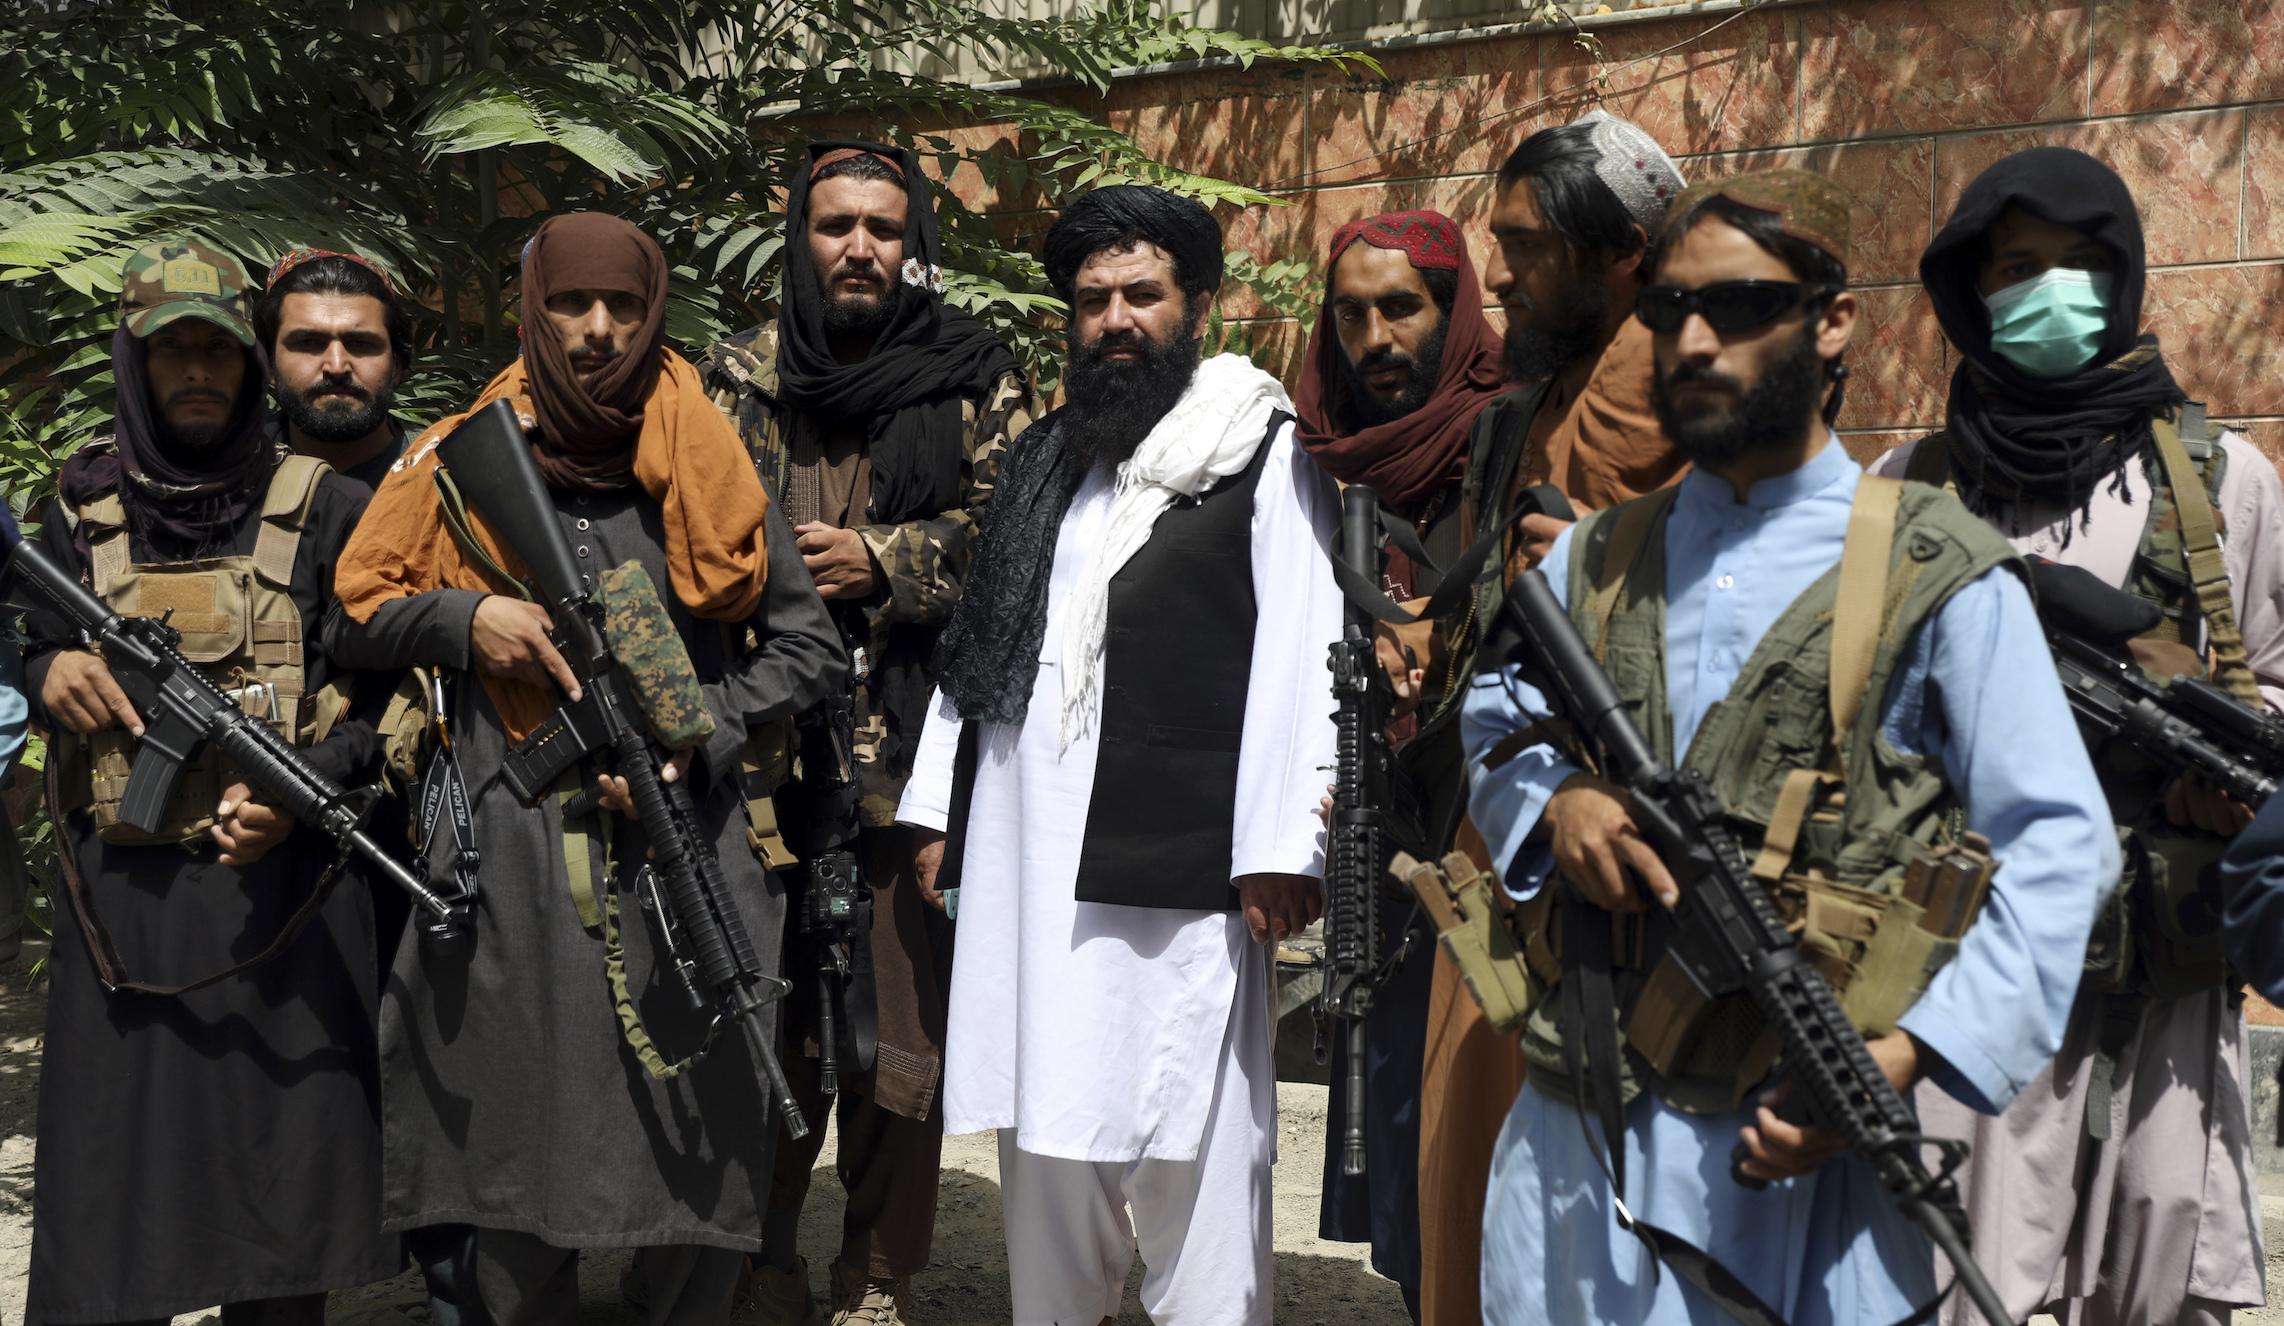 Pregnant California woman stuck in Afghanistan says Taliban ‘hunting Americans’ - Washington Examiner